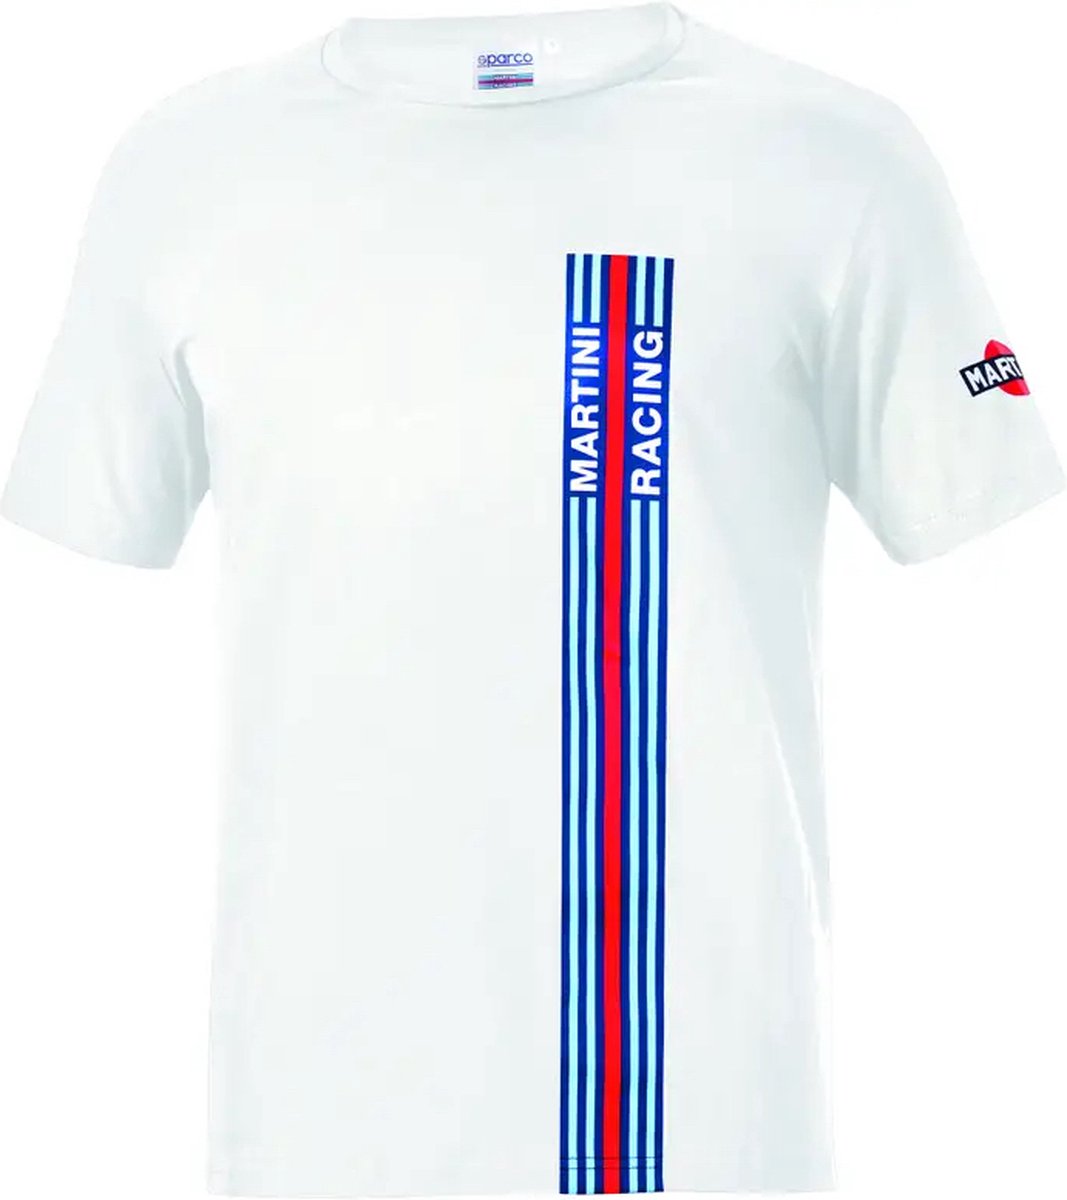 Sparco T-Shirt Big Stripes Martini Racing - Iconisch Italiaans T-shirt - Wit - Race T-shirt maat M